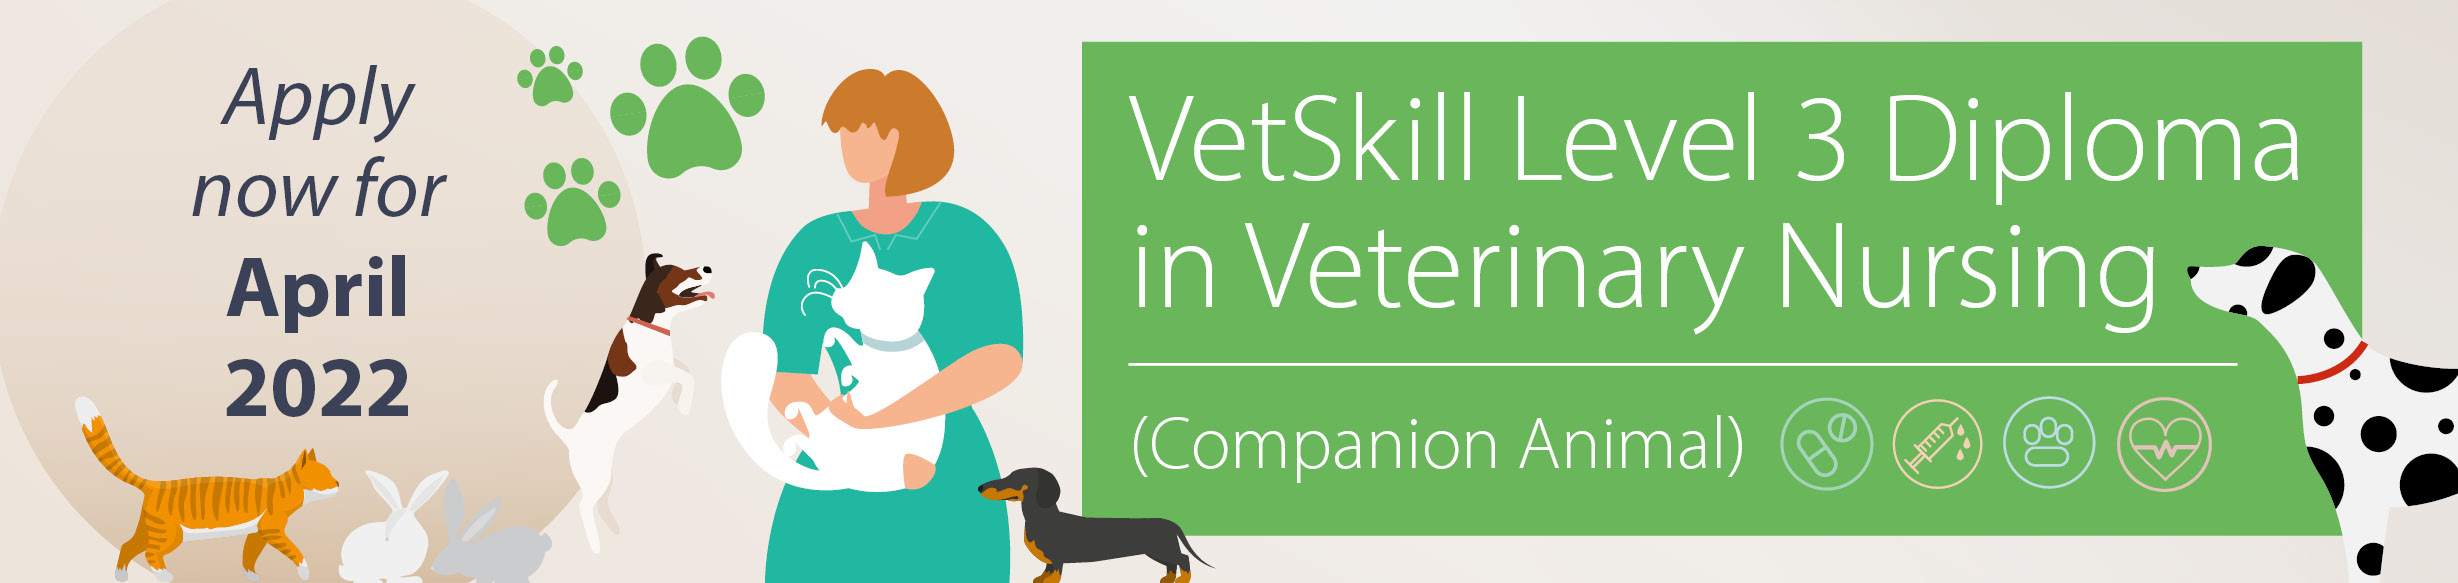 Start studying the Level 3 Diploma in Veterinary Nursing in April 2022